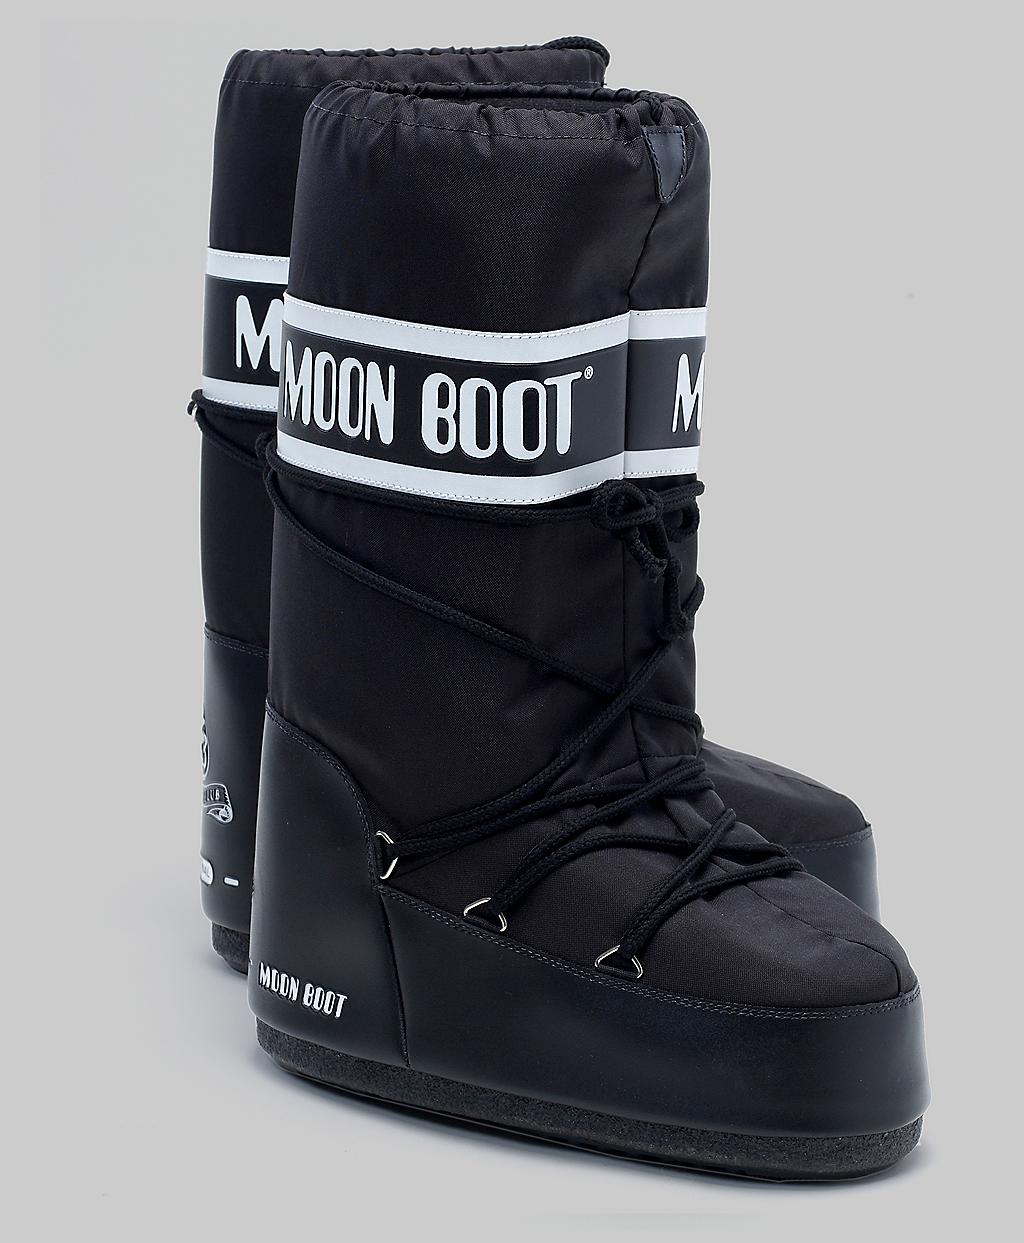 moom boots